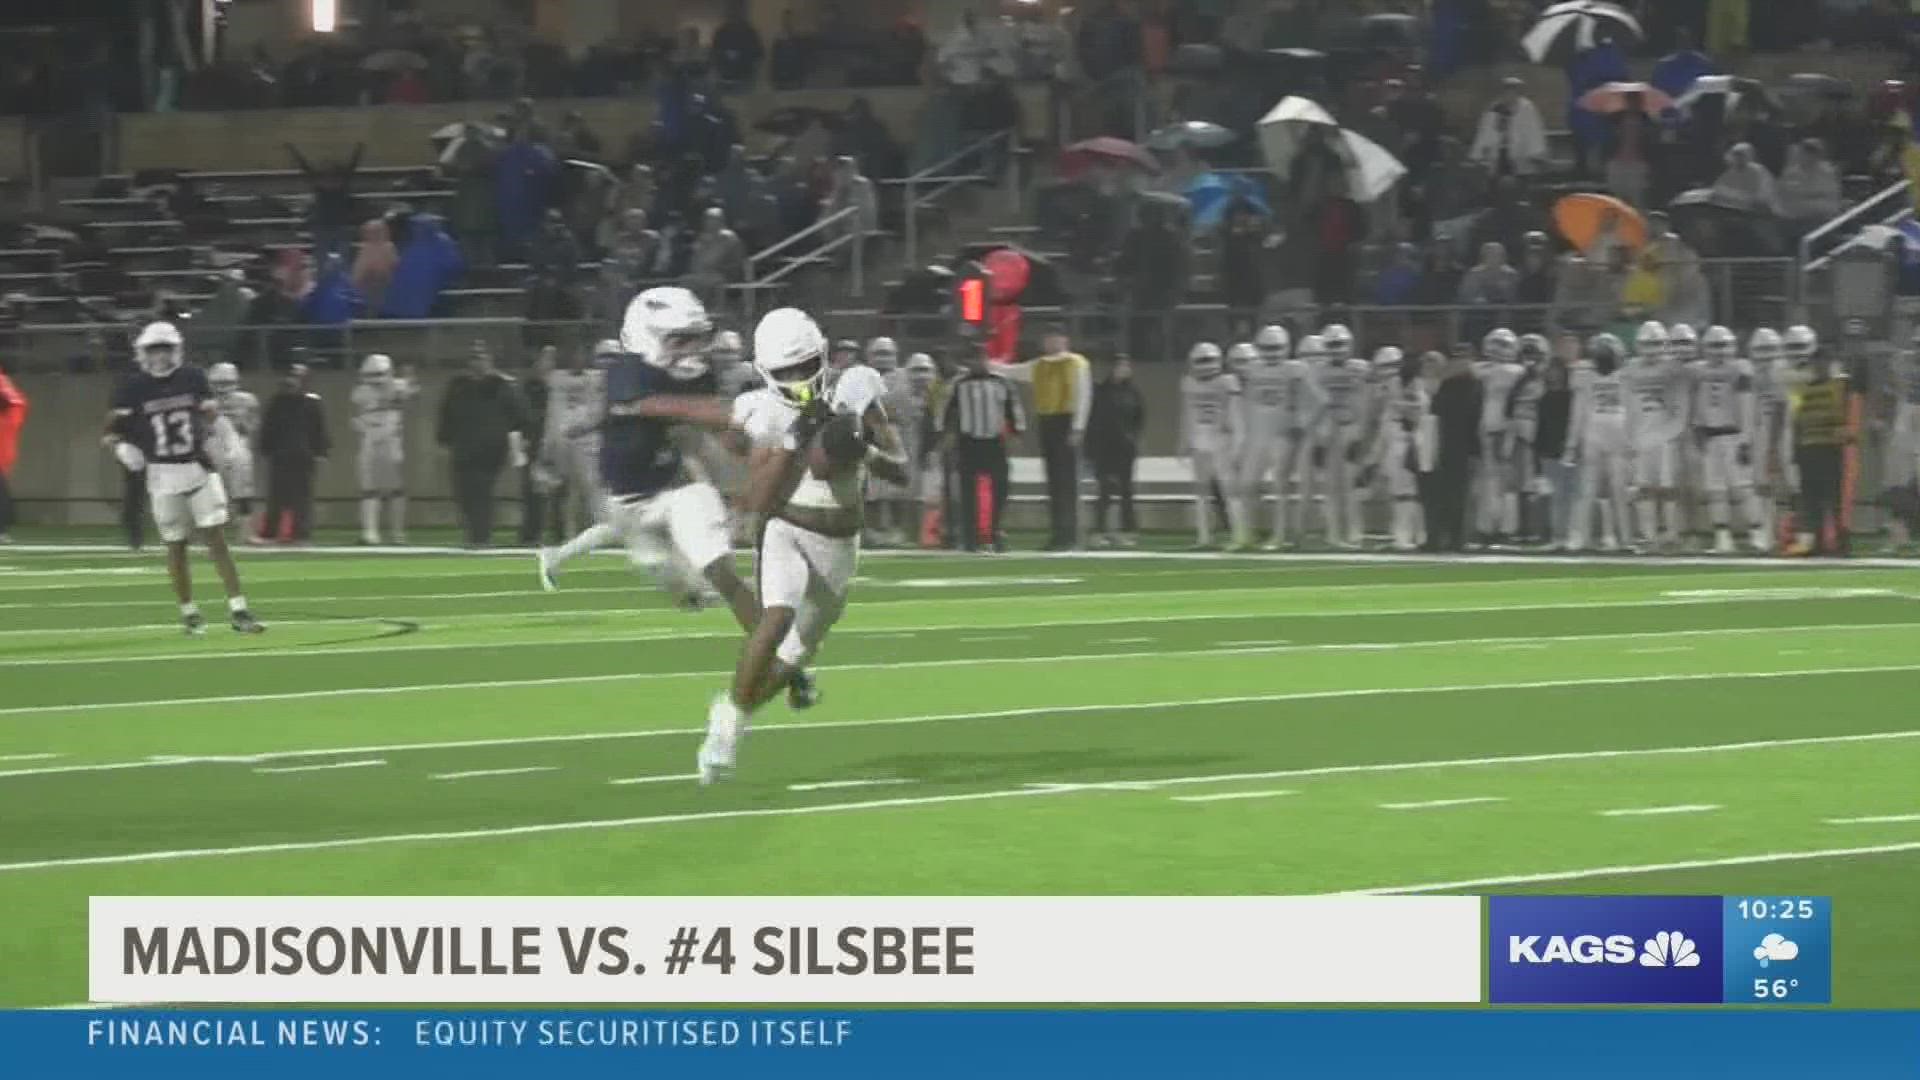 Madisonville falls to #4 Silsbee, 60-20